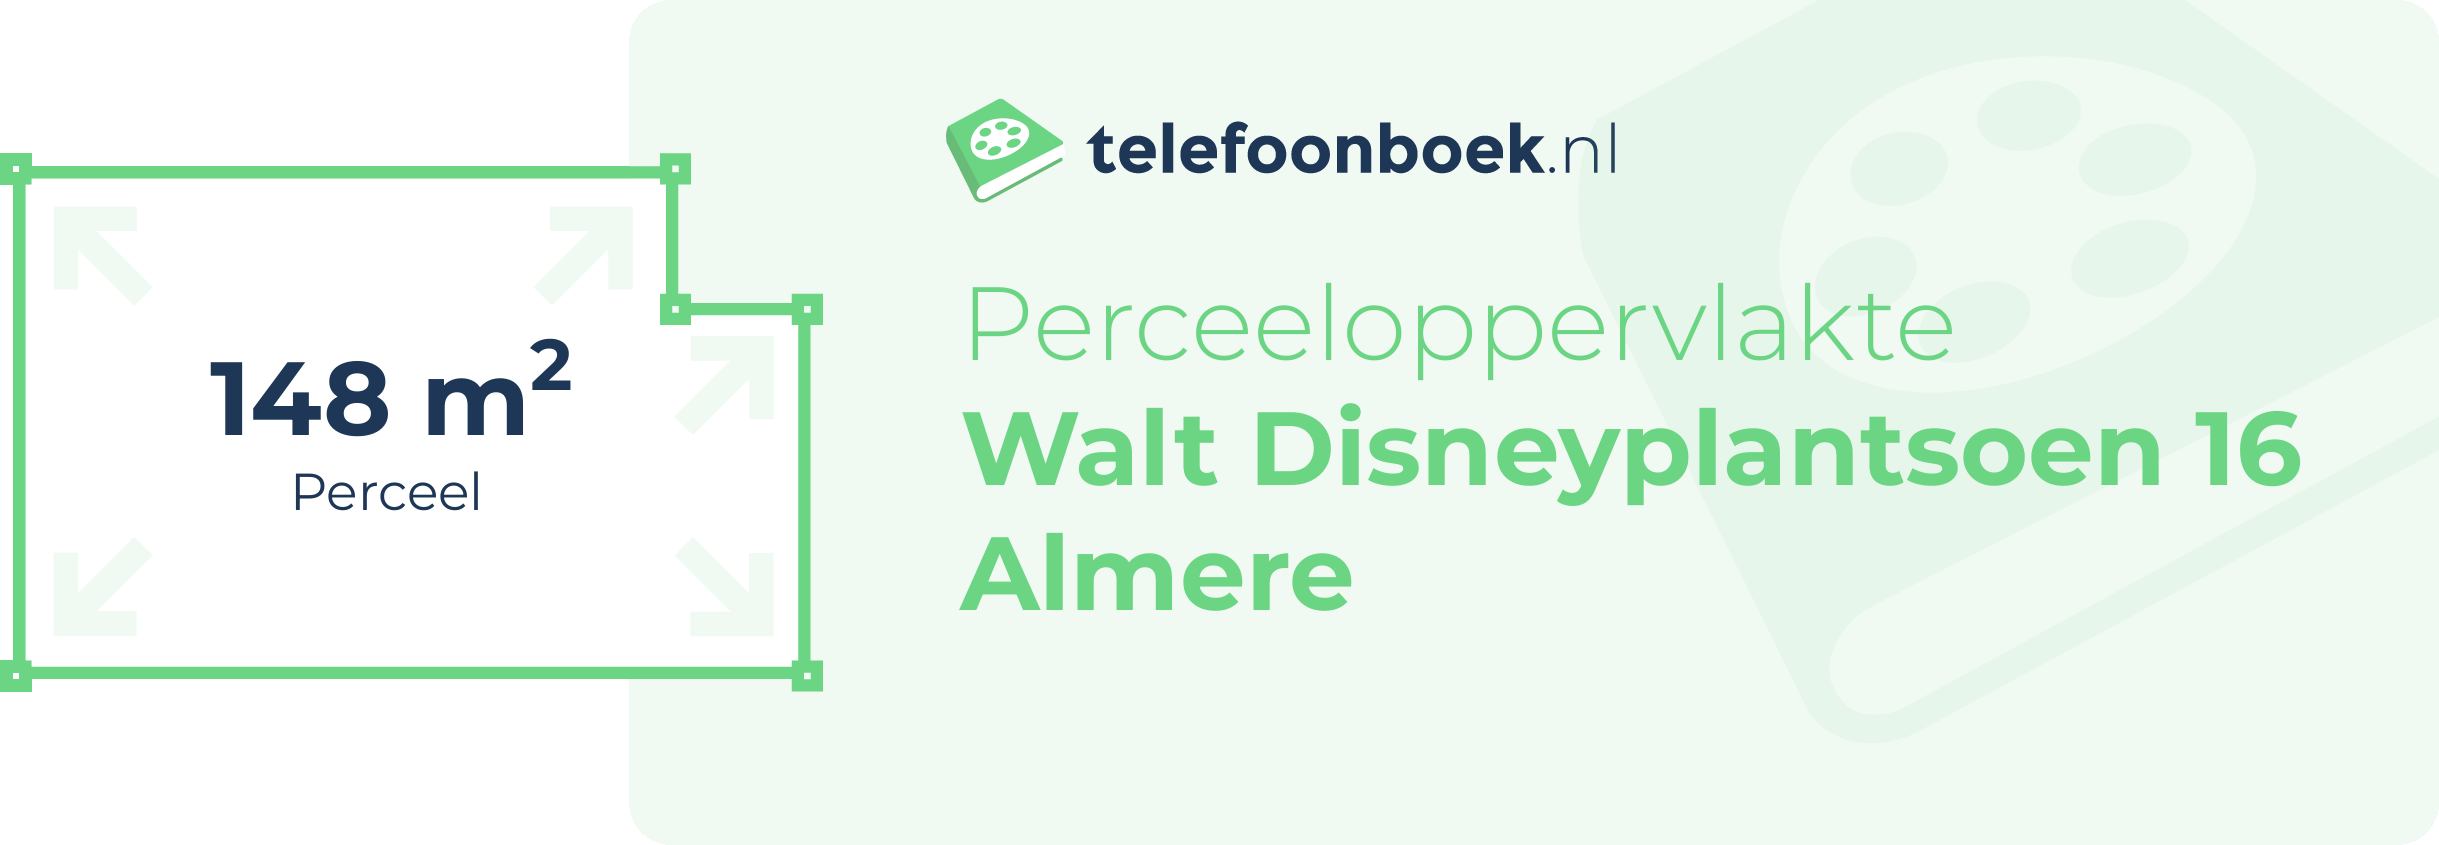 Perceeloppervlakte Walt Disneyplantsoen 16 Almere